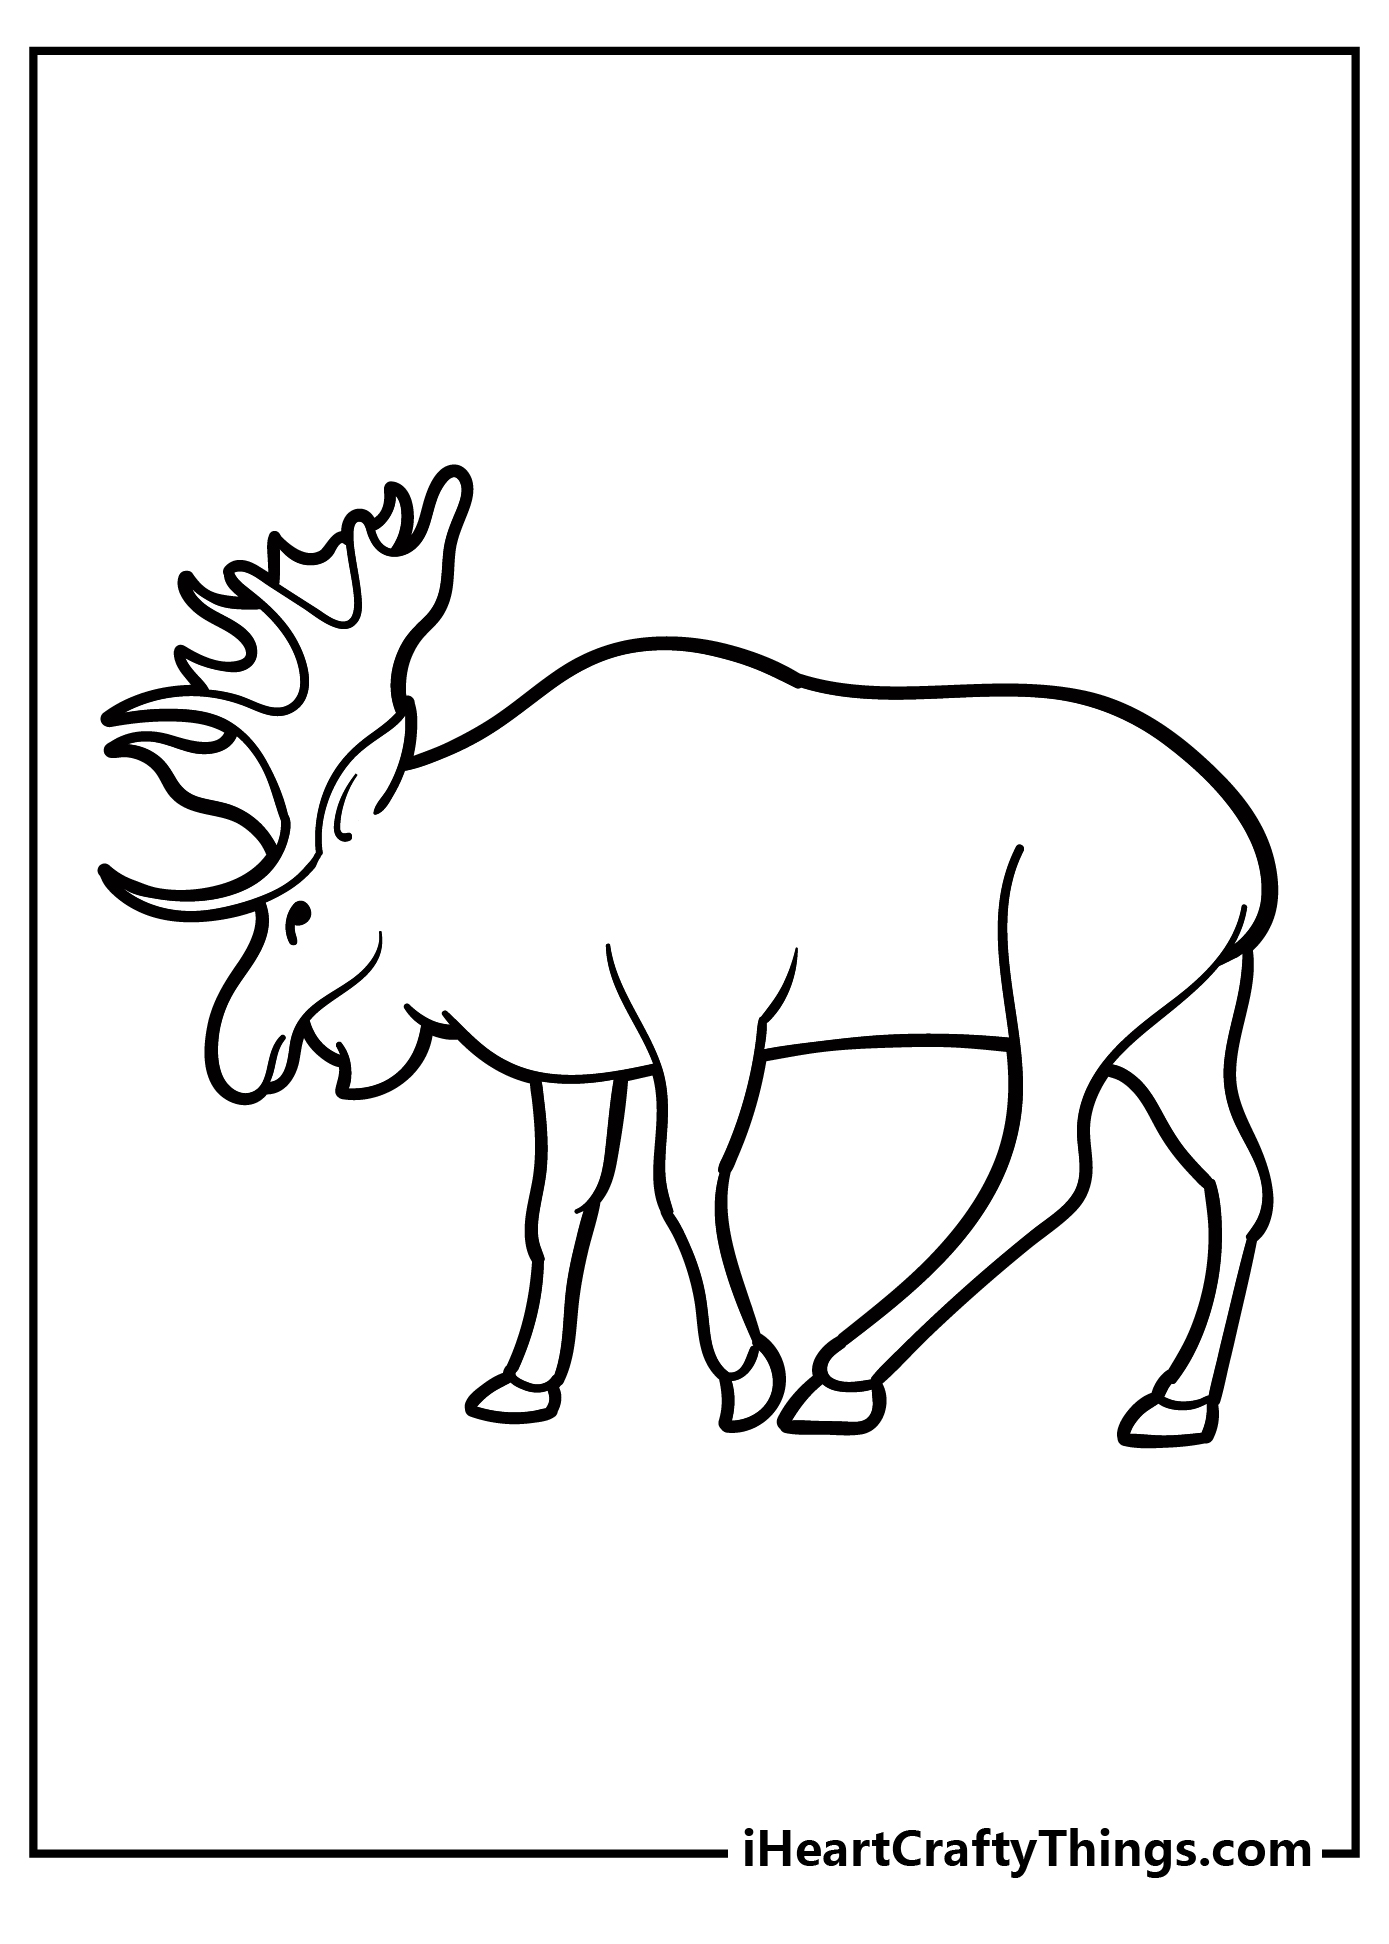 Moose Coloring Original Sheet for children free download